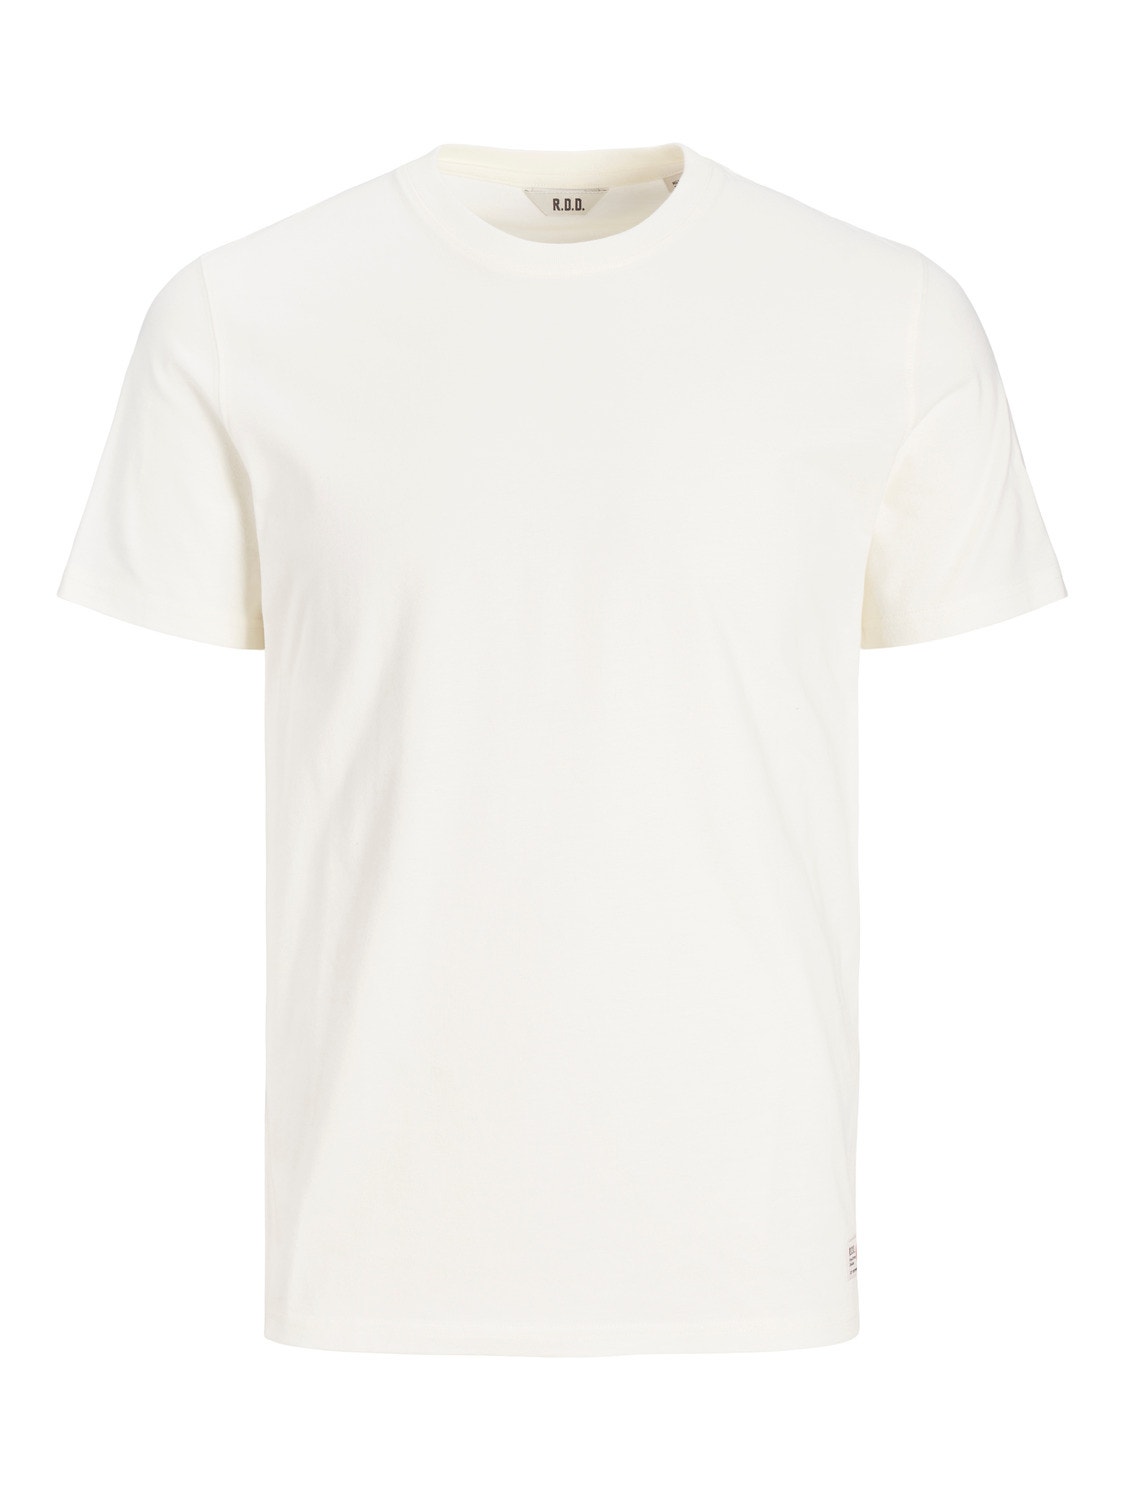 Jack & Jones RDD Plain O-Neck T-shirt -Egret - 12218240